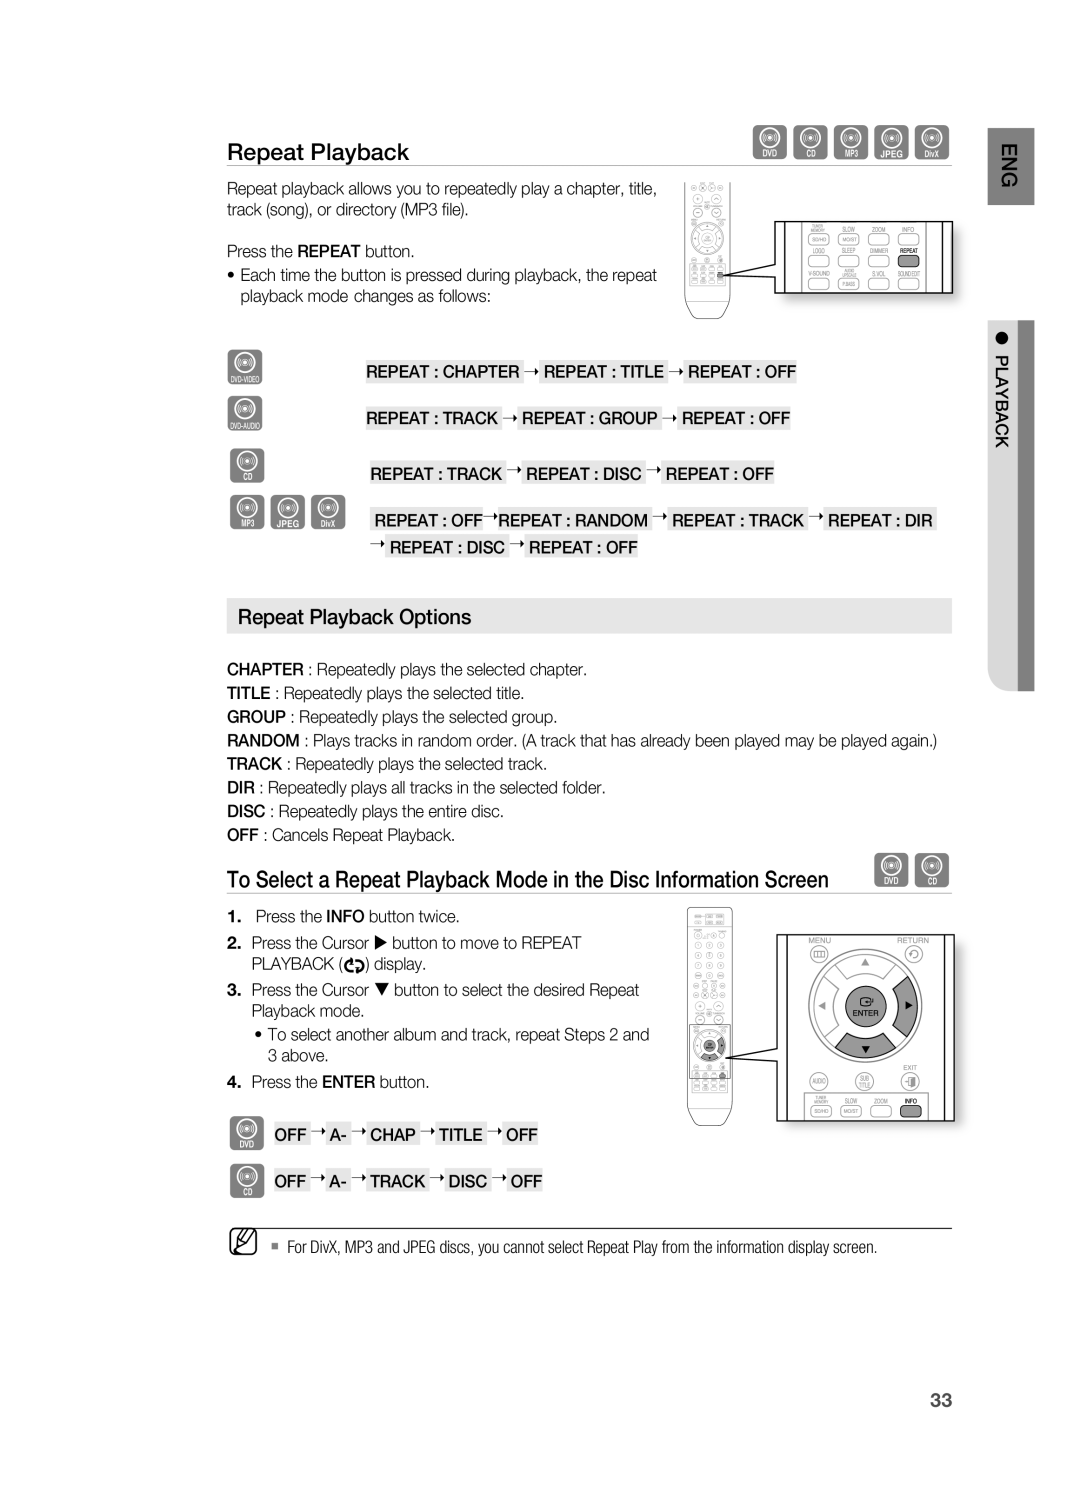 Samsung HT-X810 user manual Bagd, repeat Playback Options 